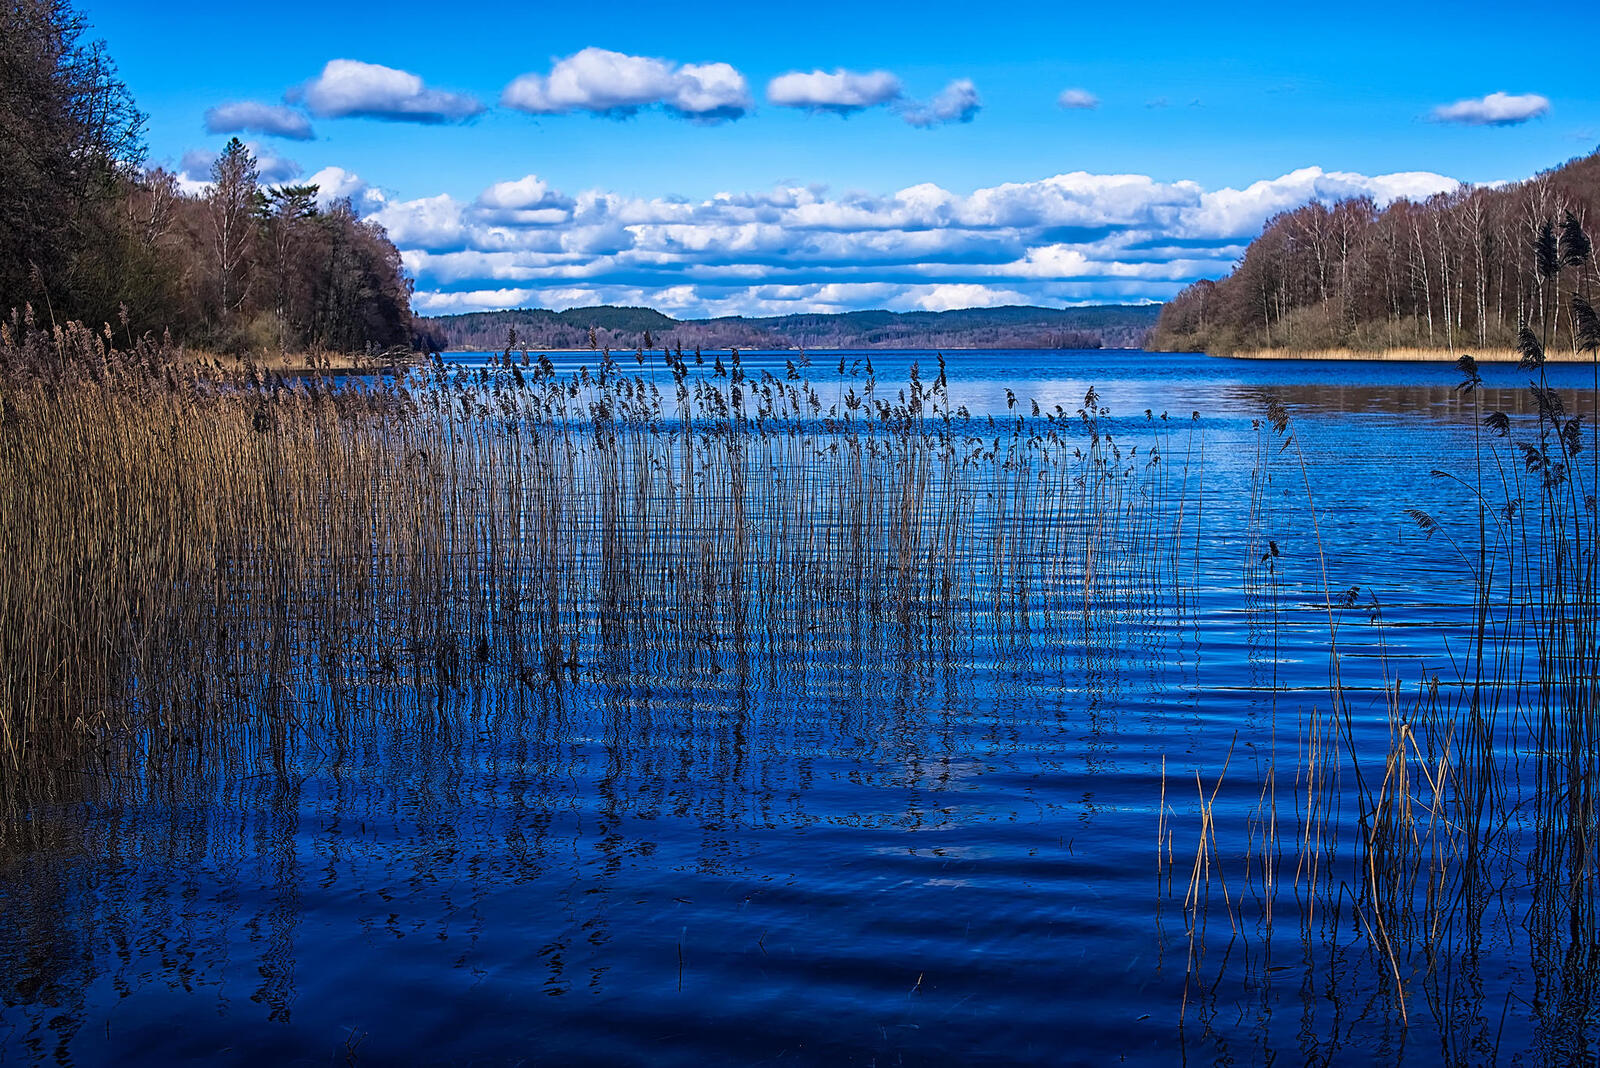 Обои Озеро Фэврен Варберг Швеция на рабочий стол